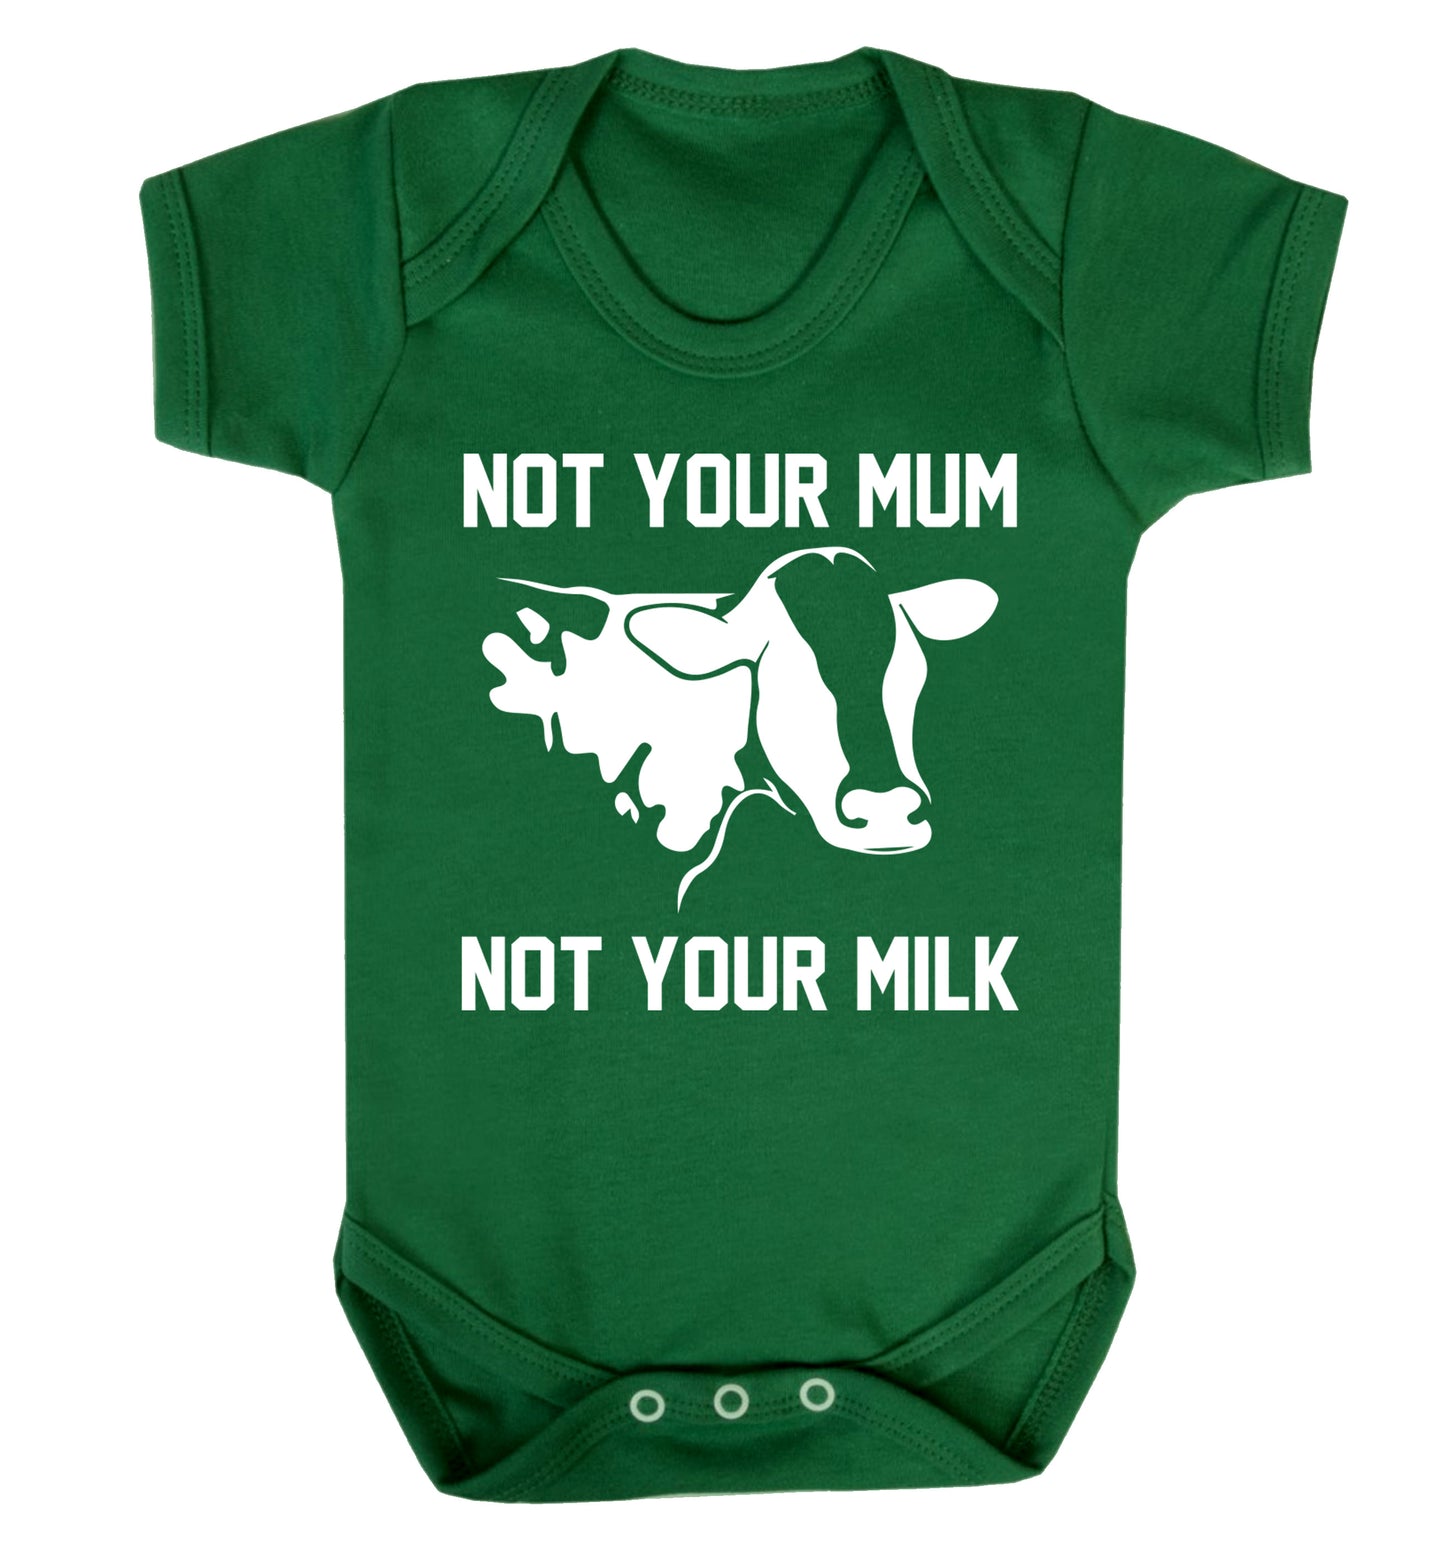 Not your mum not your milk Baby Vest green 18-24 months